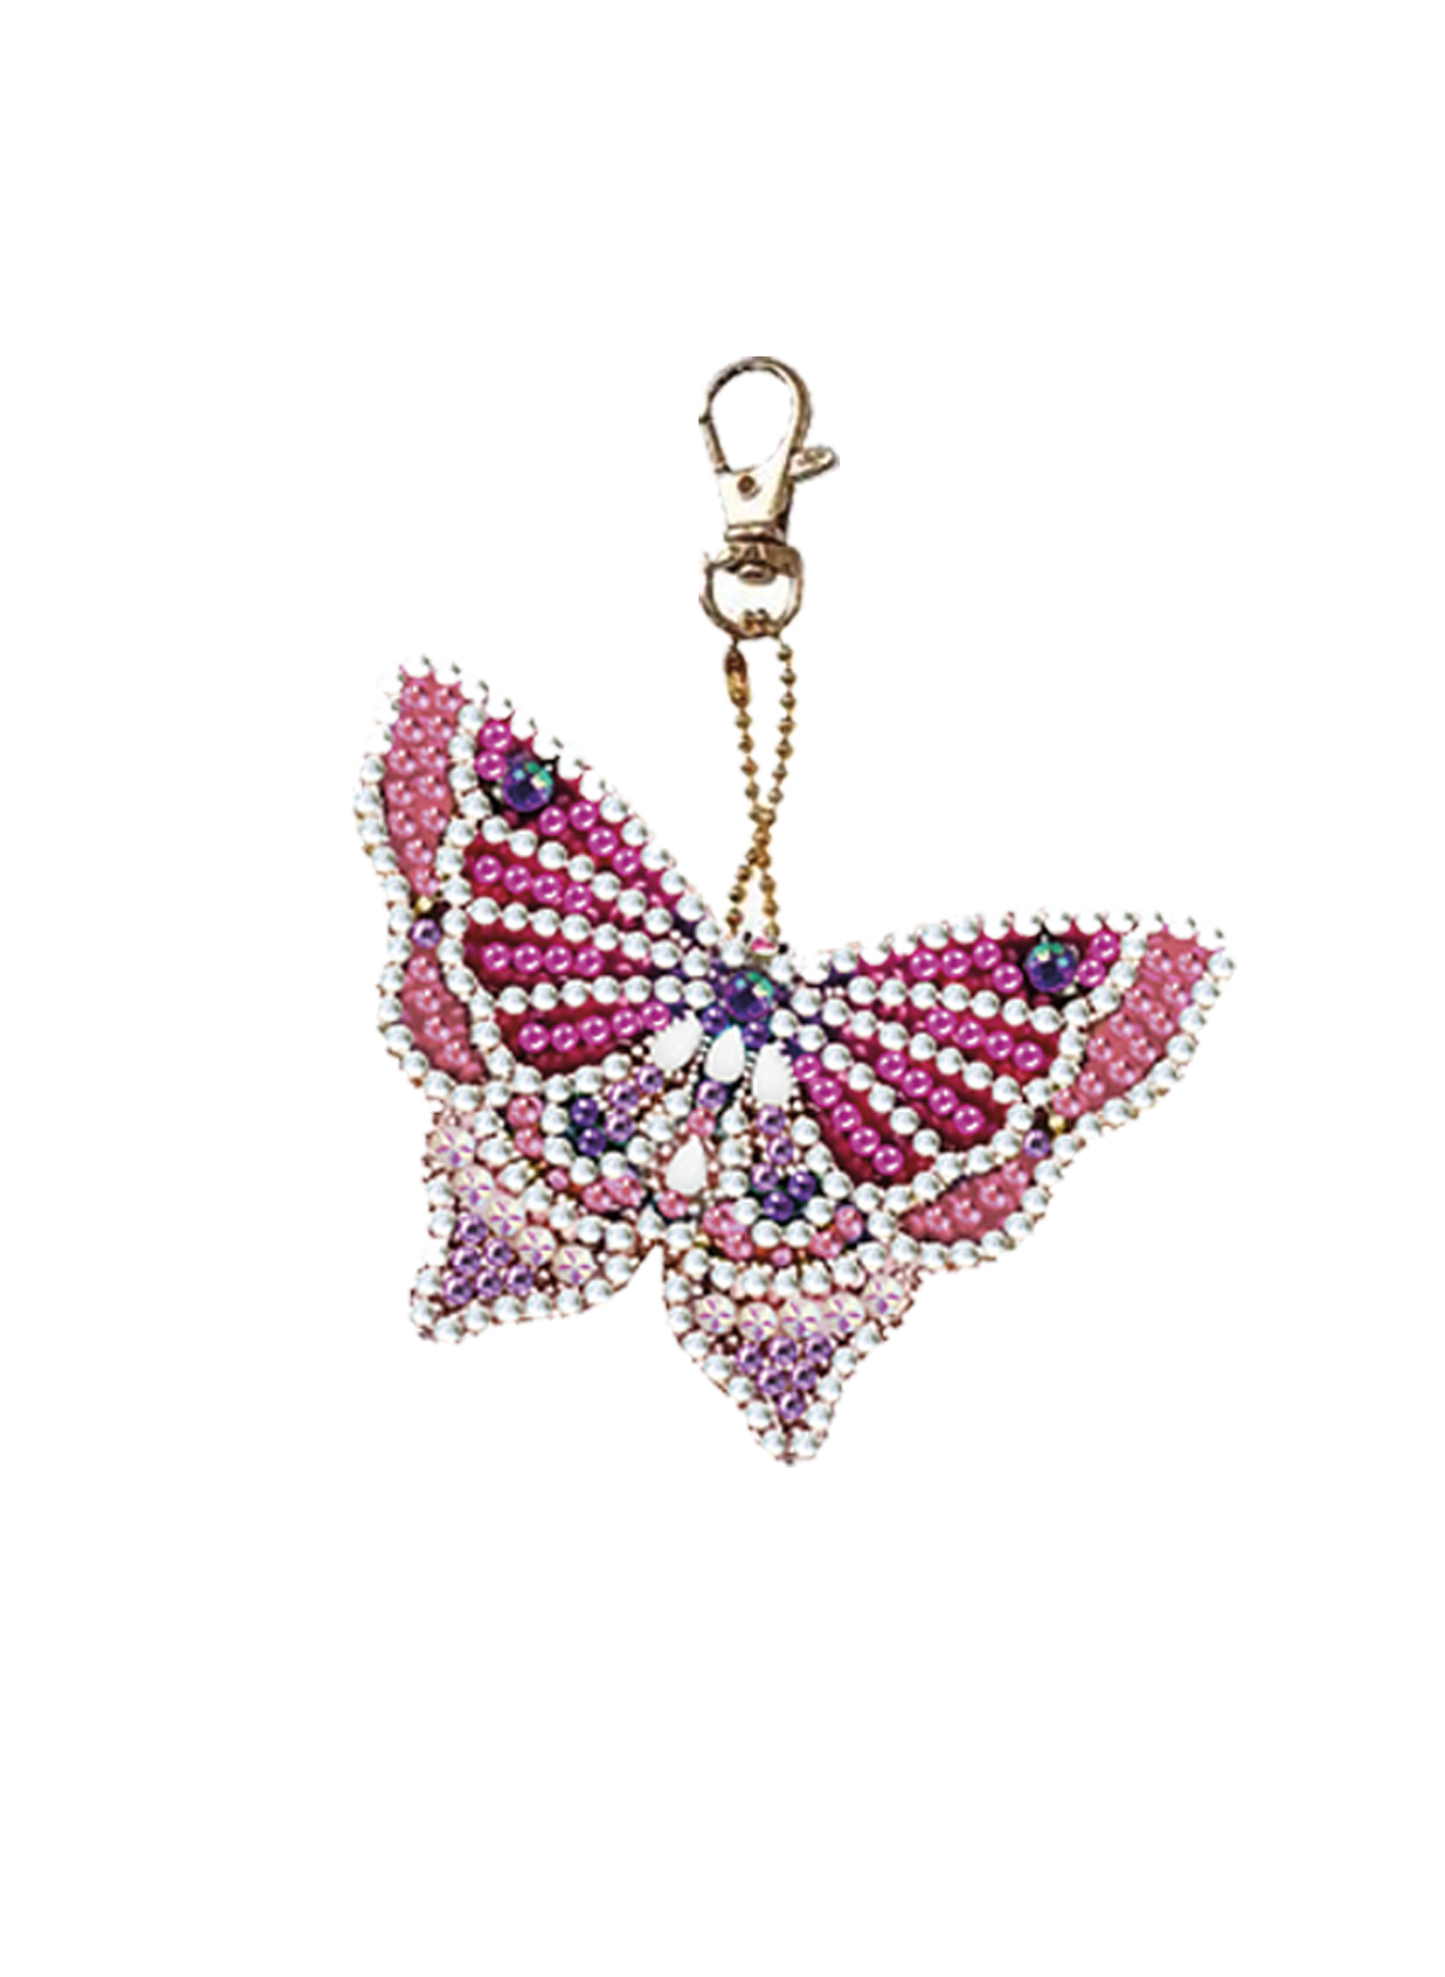 Diamond Art Butterfly Keychain